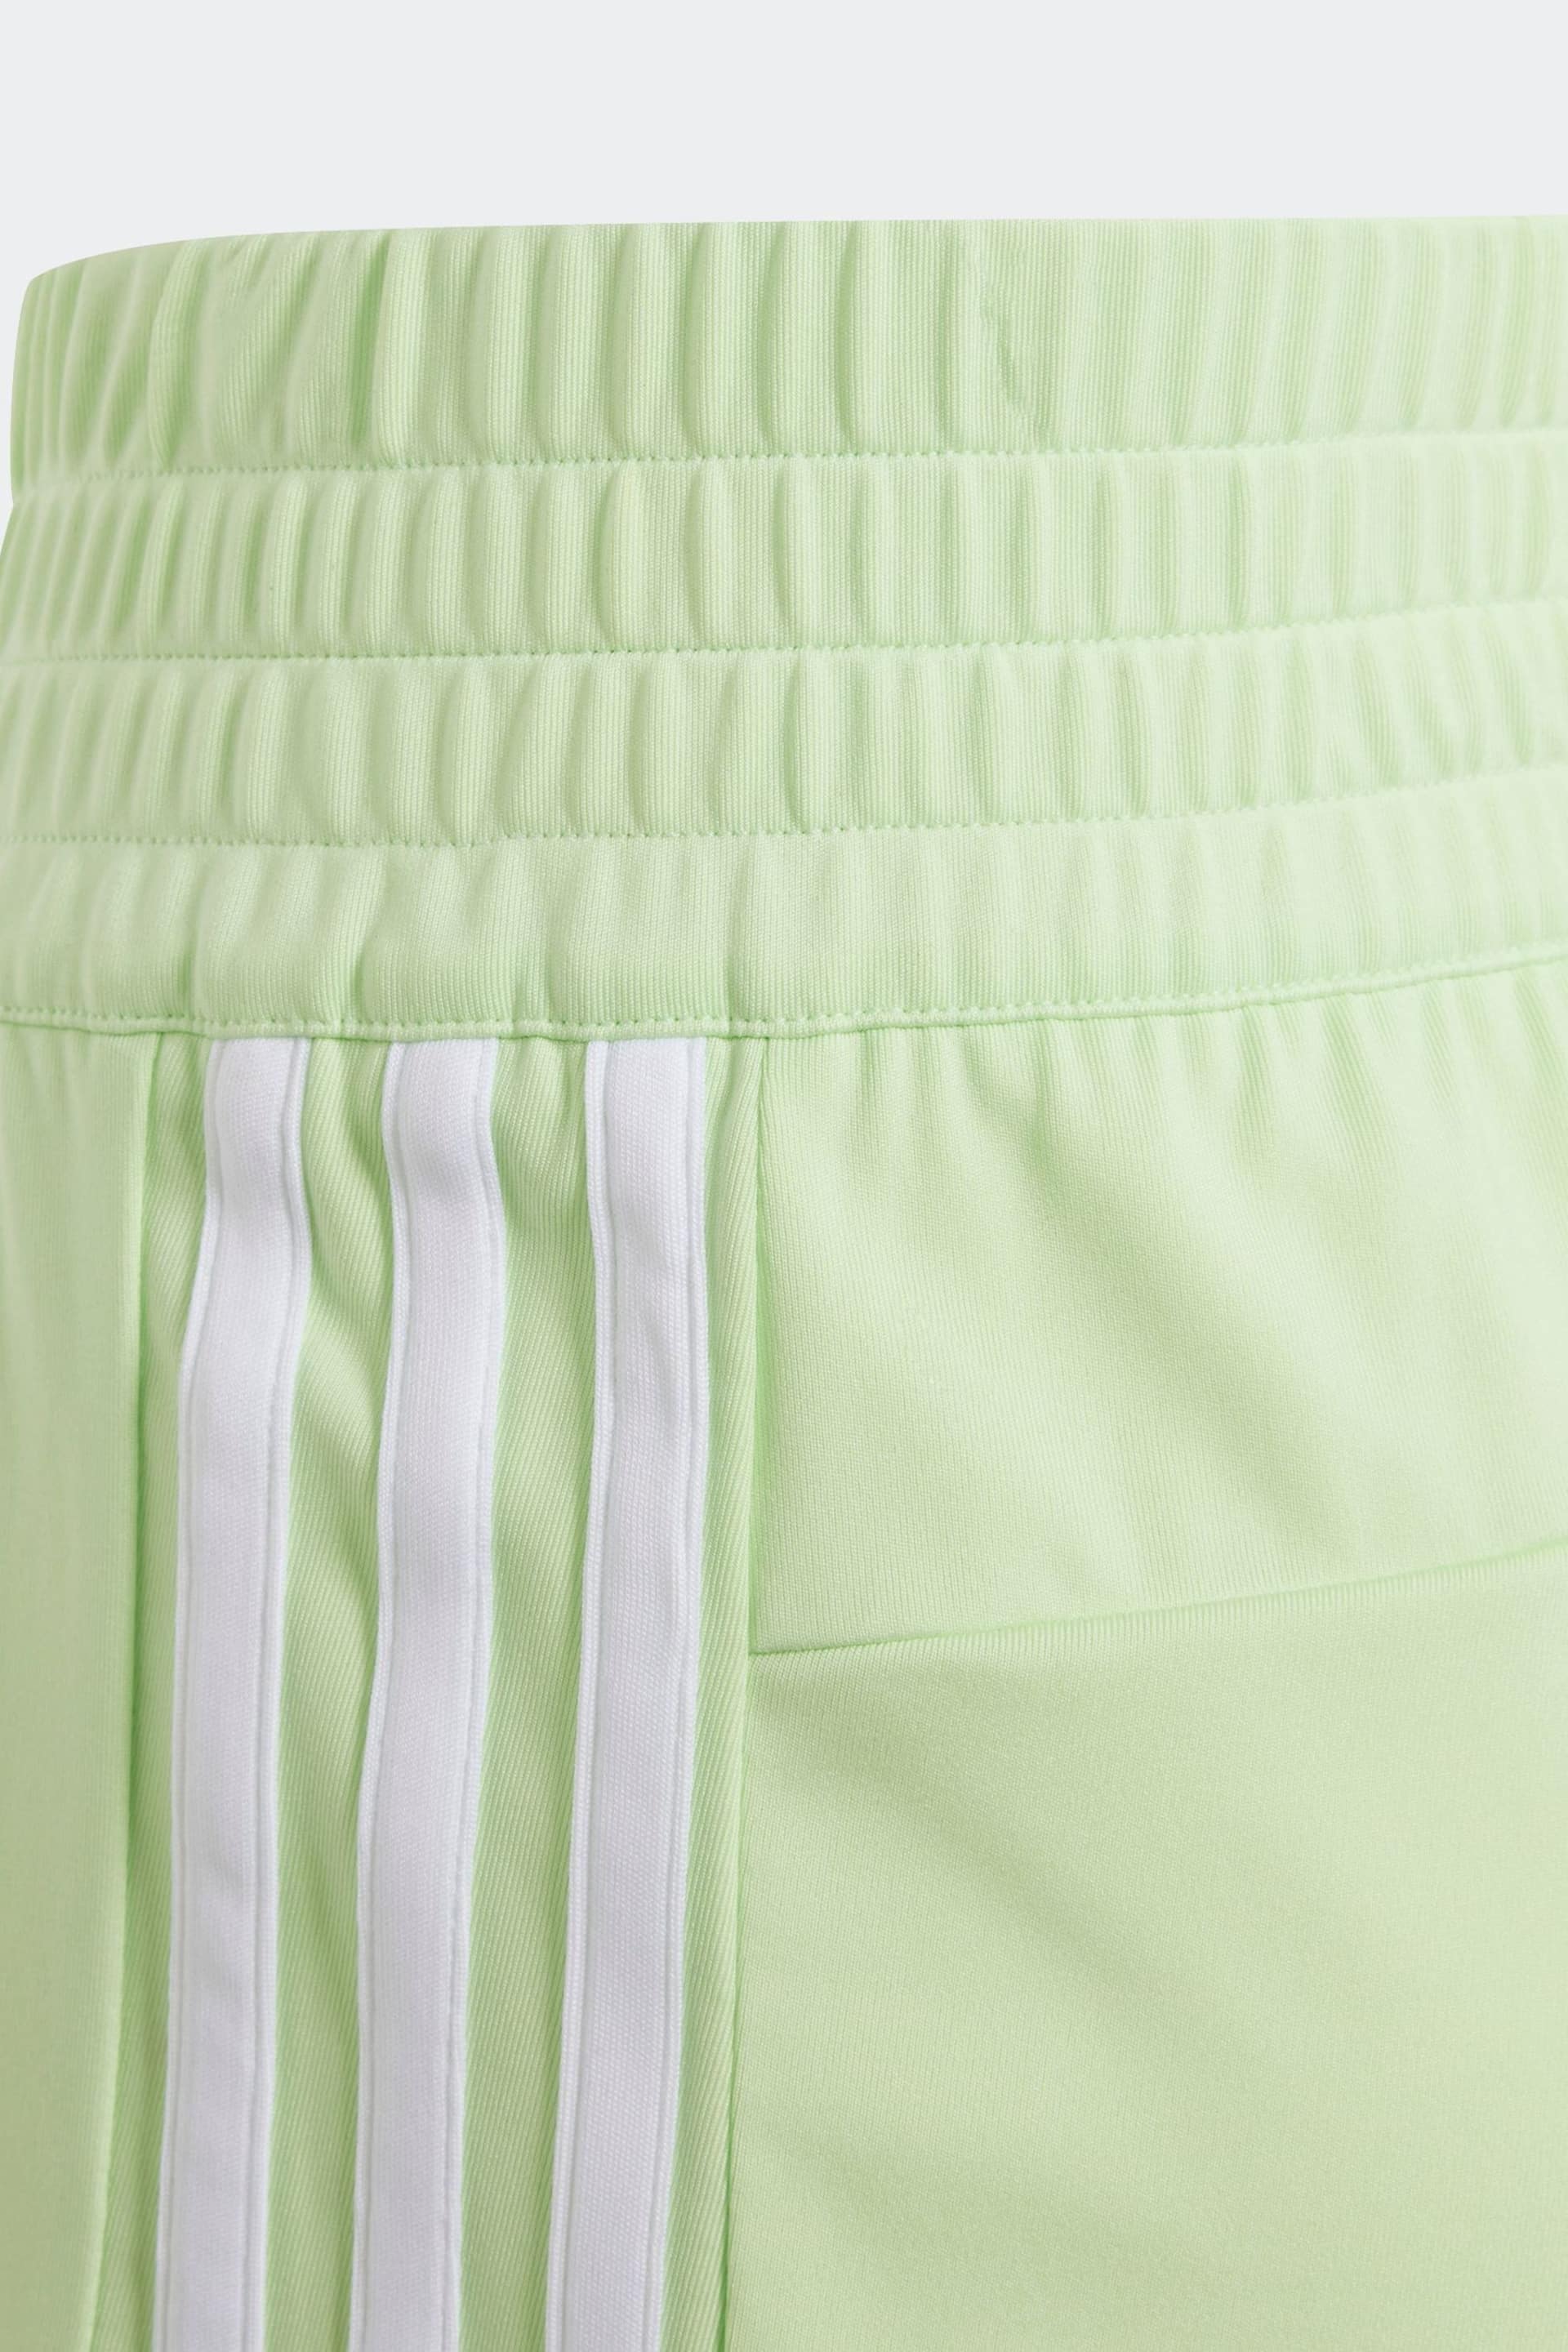 adidas Green Kids Sportswear Pacer Shorts - Image 3 of 4